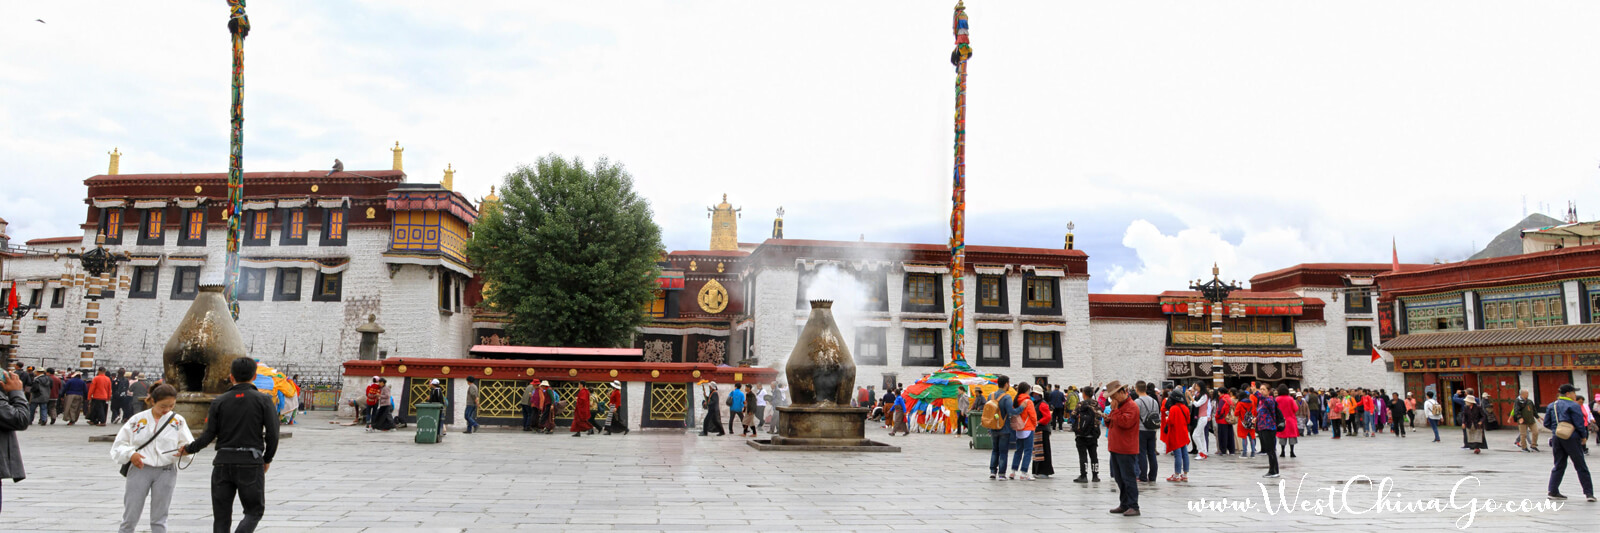 Tibet Lhasa Jokhang Temple